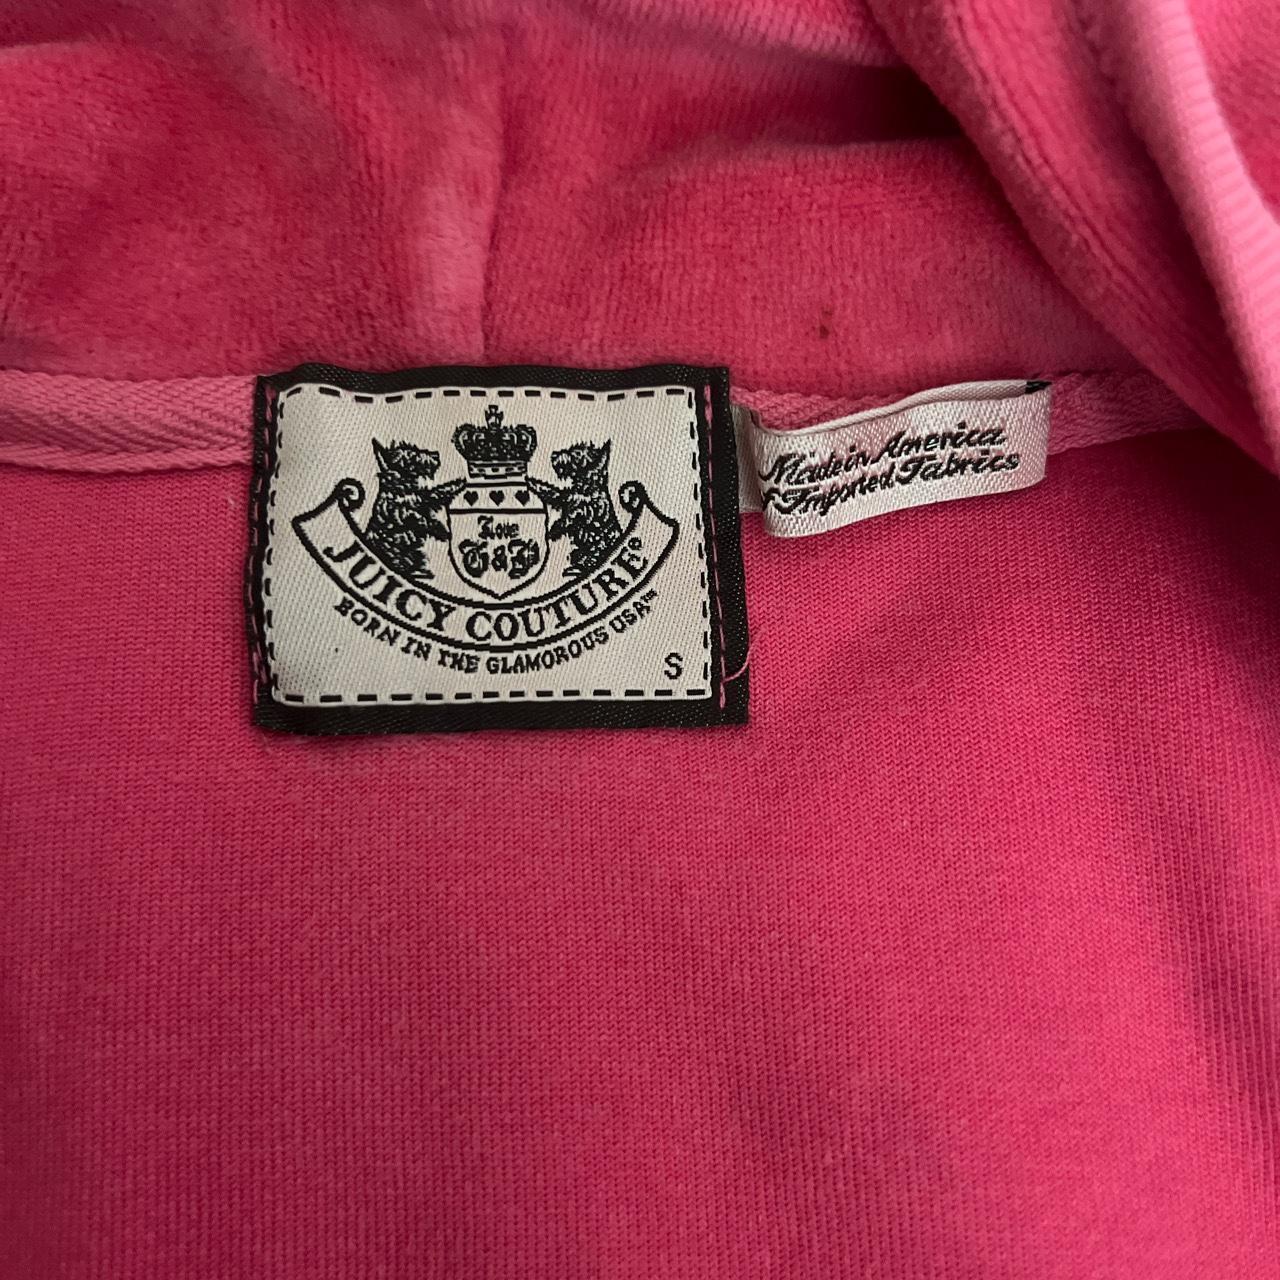 juicy couture hot pink jacket 🩷 some marks 🩹 #y2k... - Depop